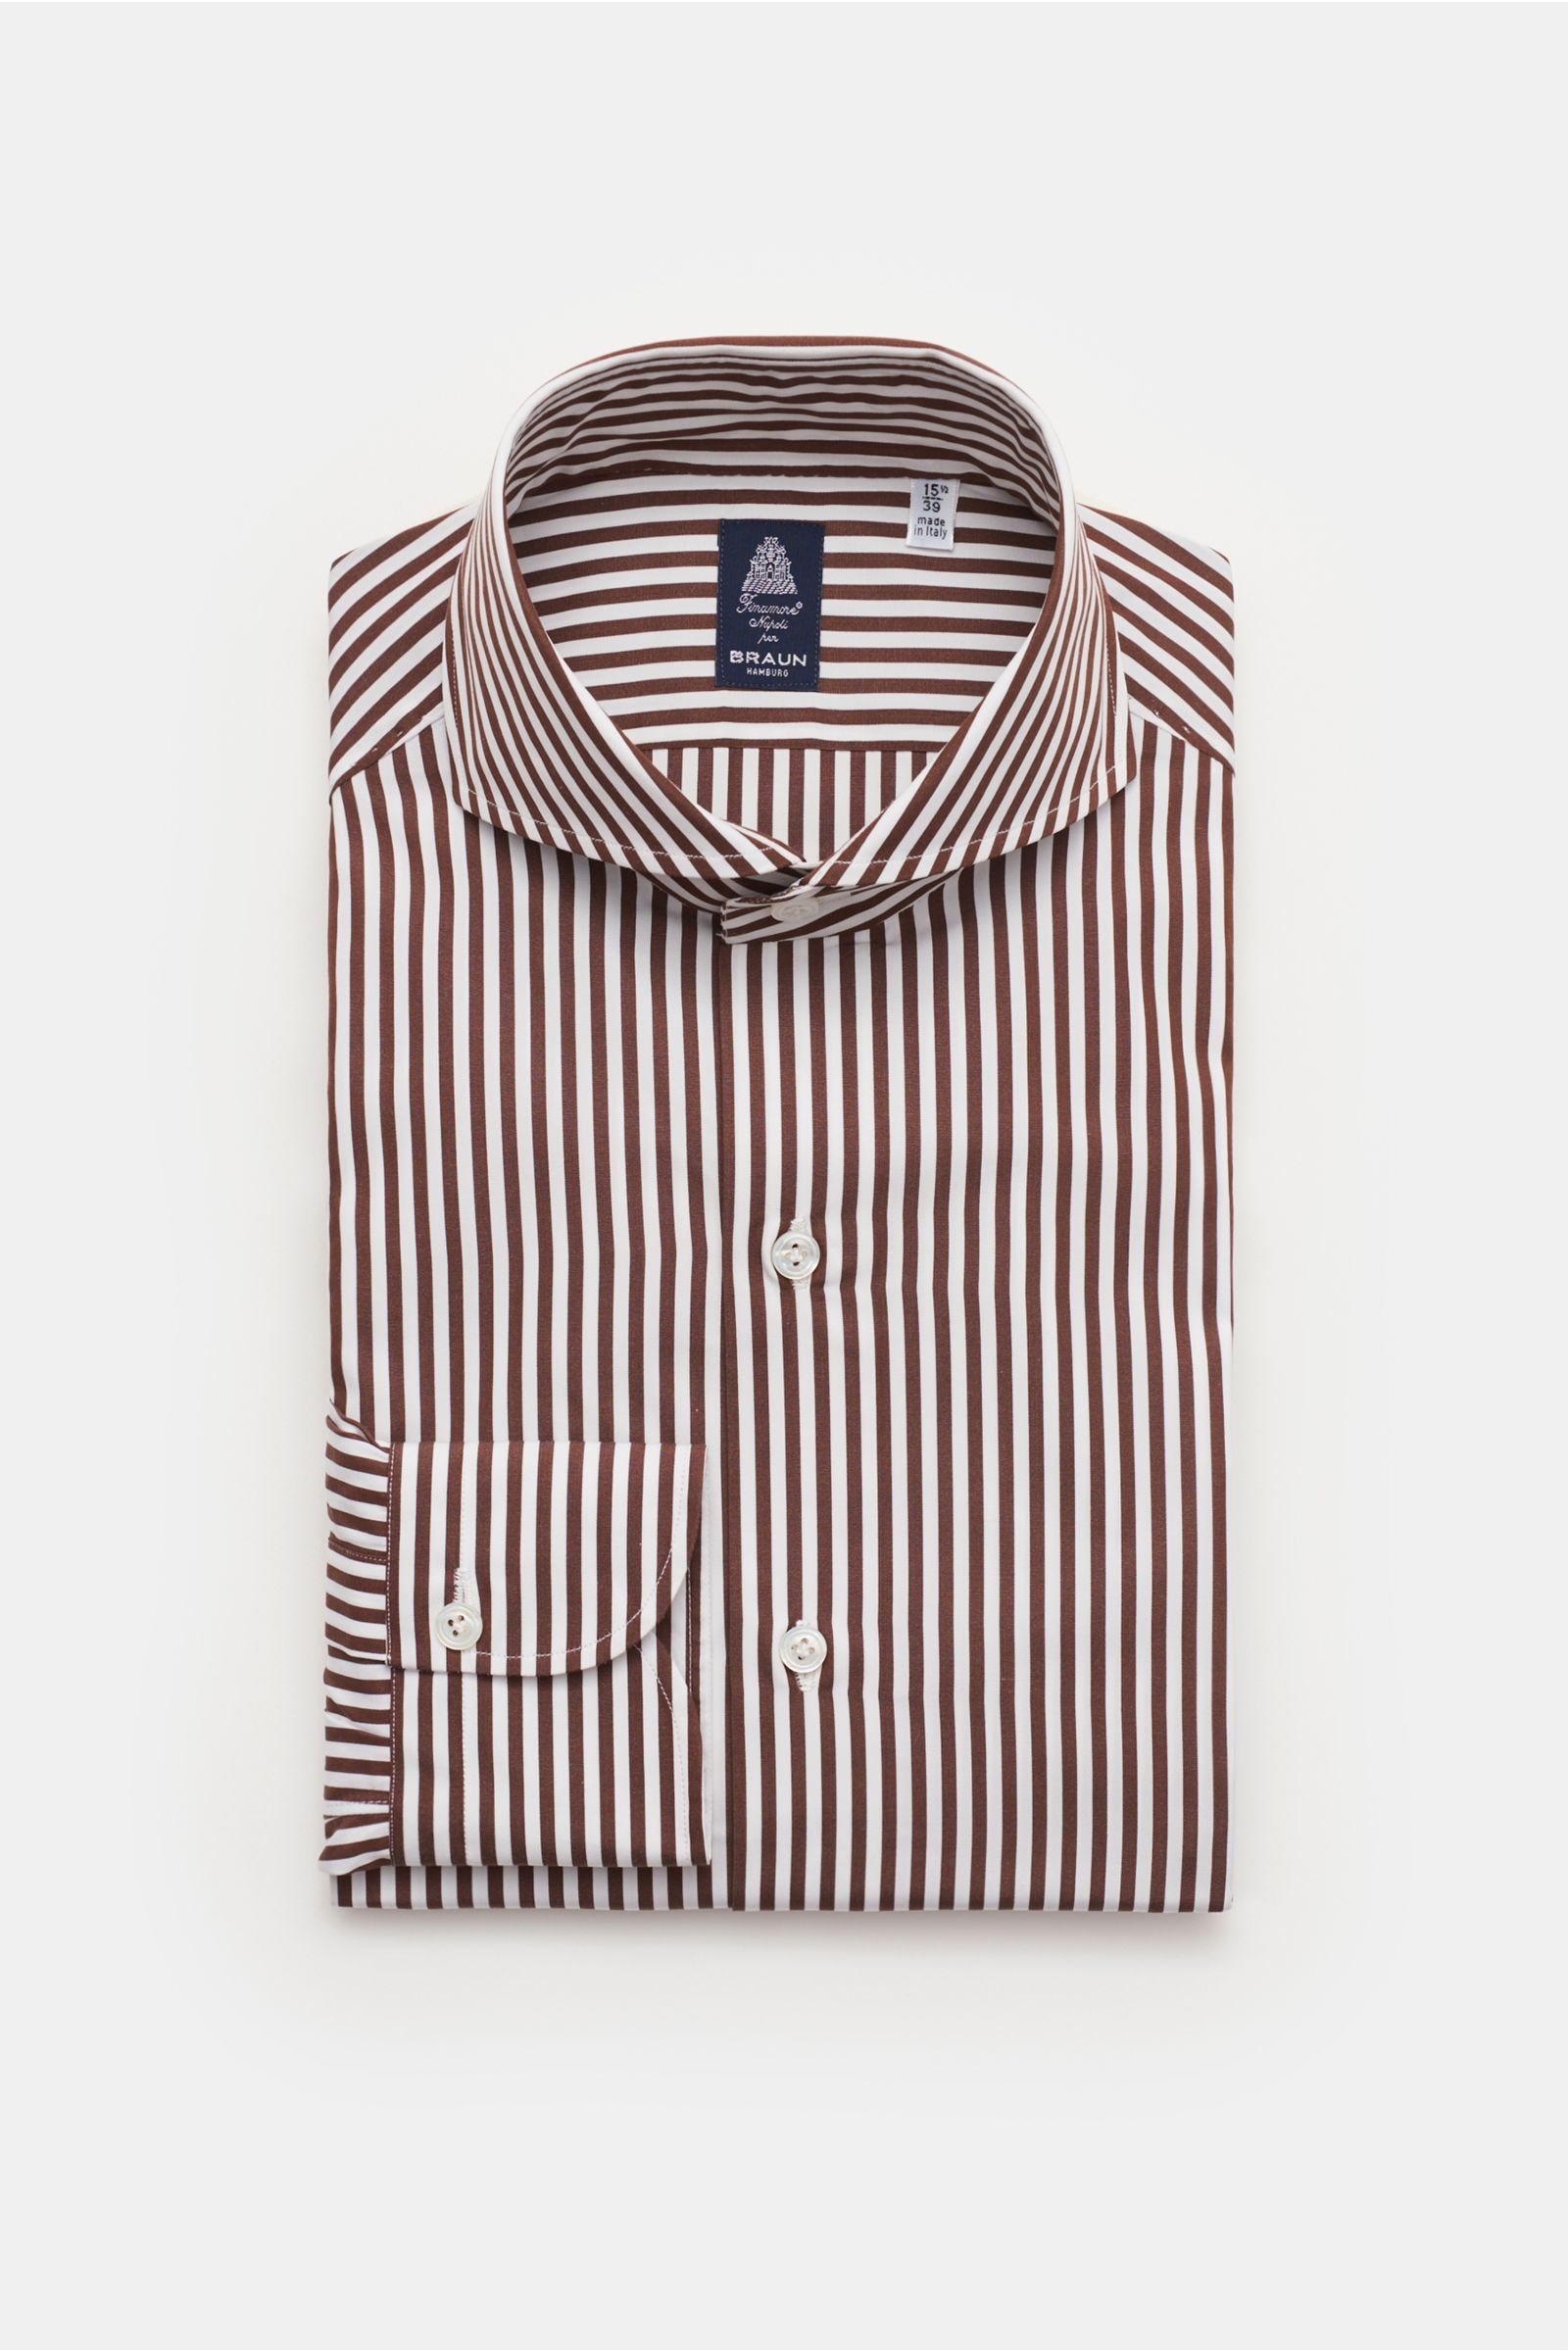 Business shirt 'Sergio Napoli' shark collar dark brown/white striped